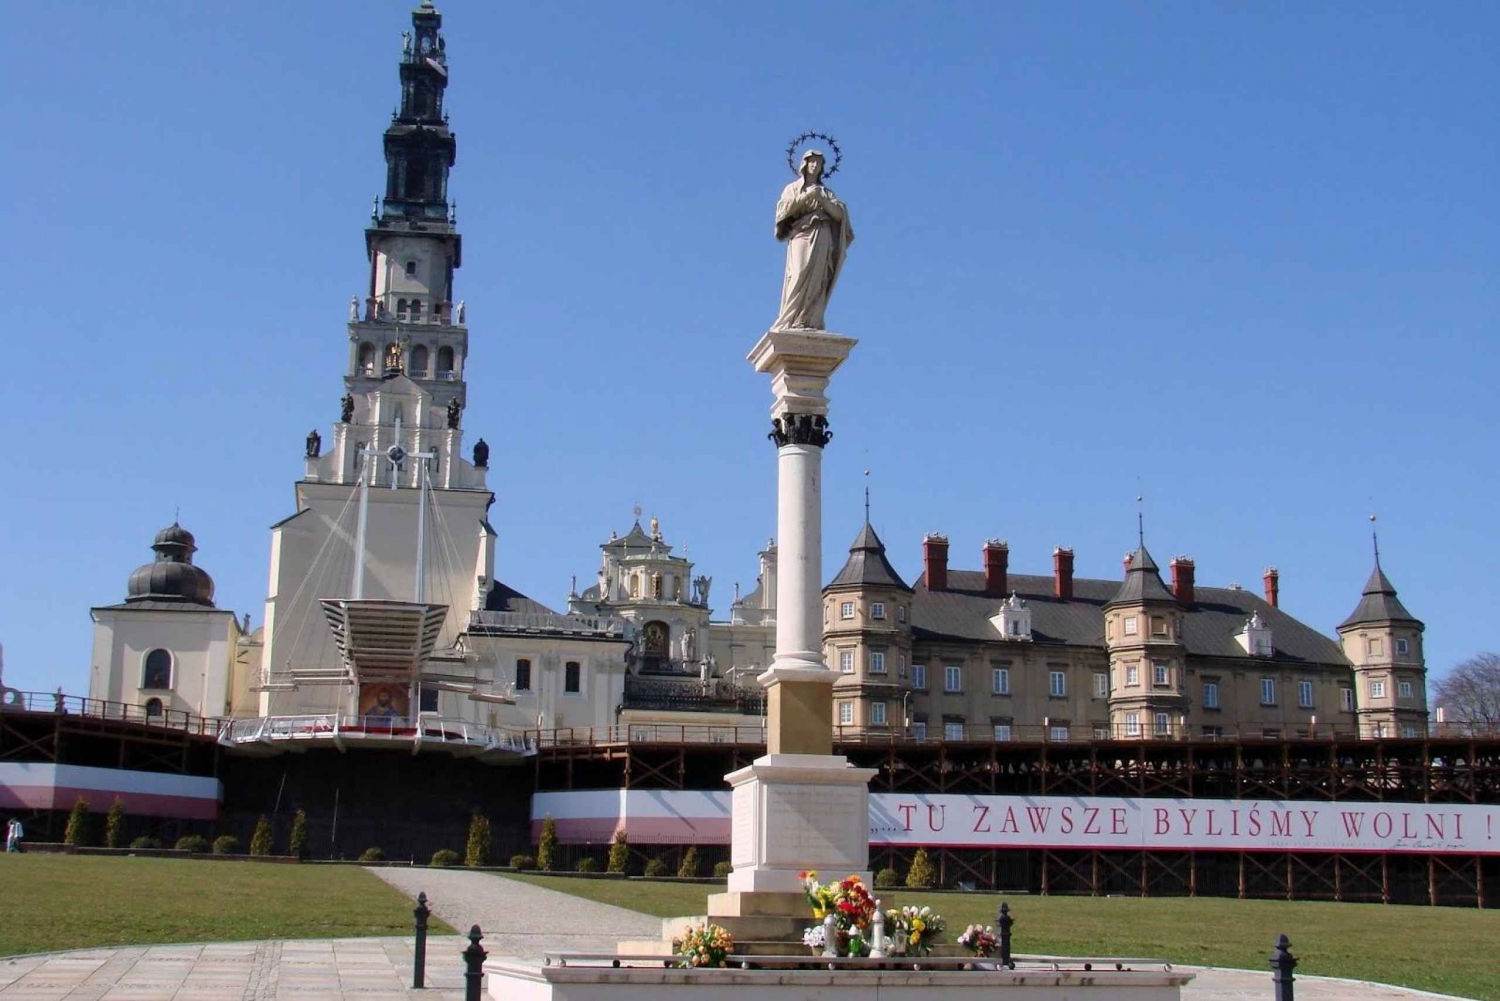 Krakow: Black Madonna of Częstochowa & Home of John Paul II